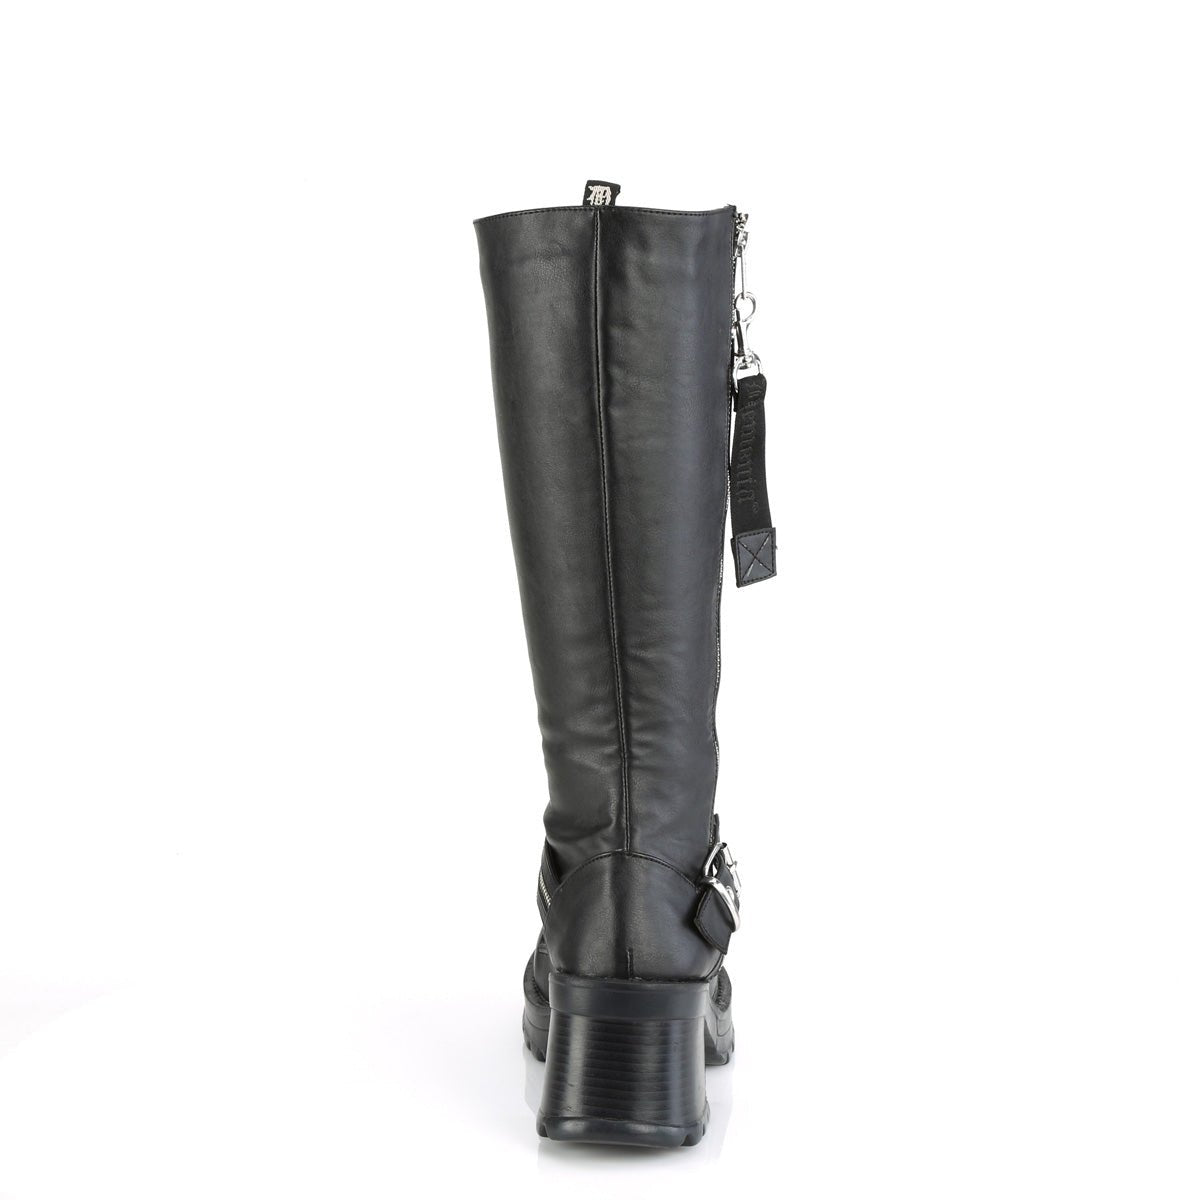 Too Fast | Demonia Bratty 206 | Black Vegan Leather Women's Knee High Boots